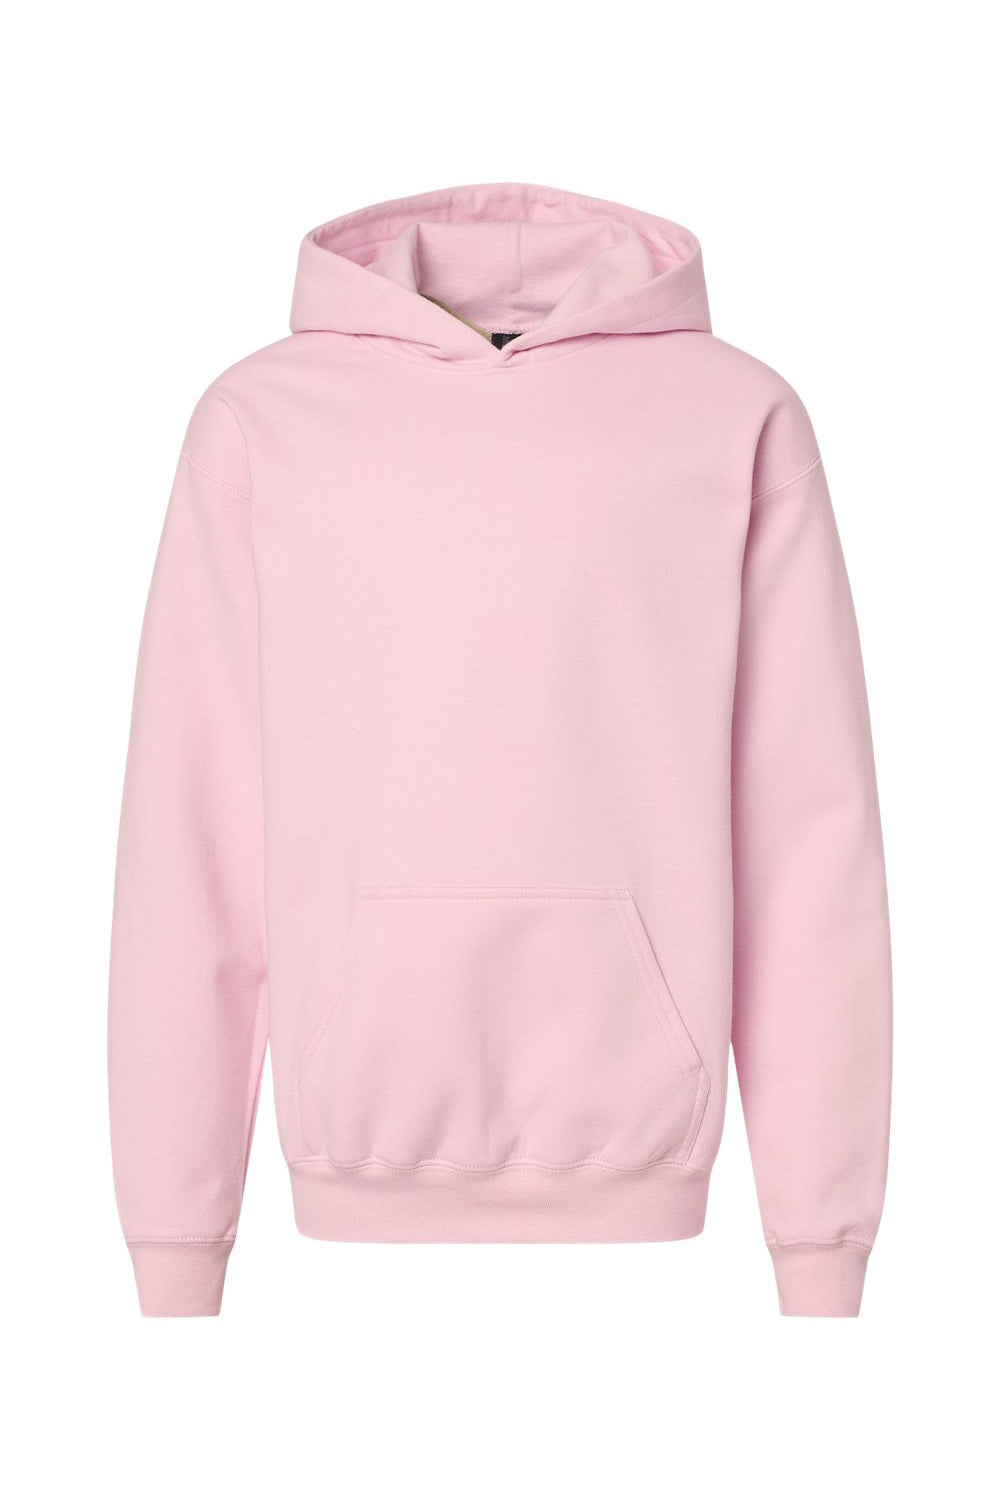 Gildan SF500B Youth Softstyle Hooded Sweatshirt Hoodie Light Pink Flat Front